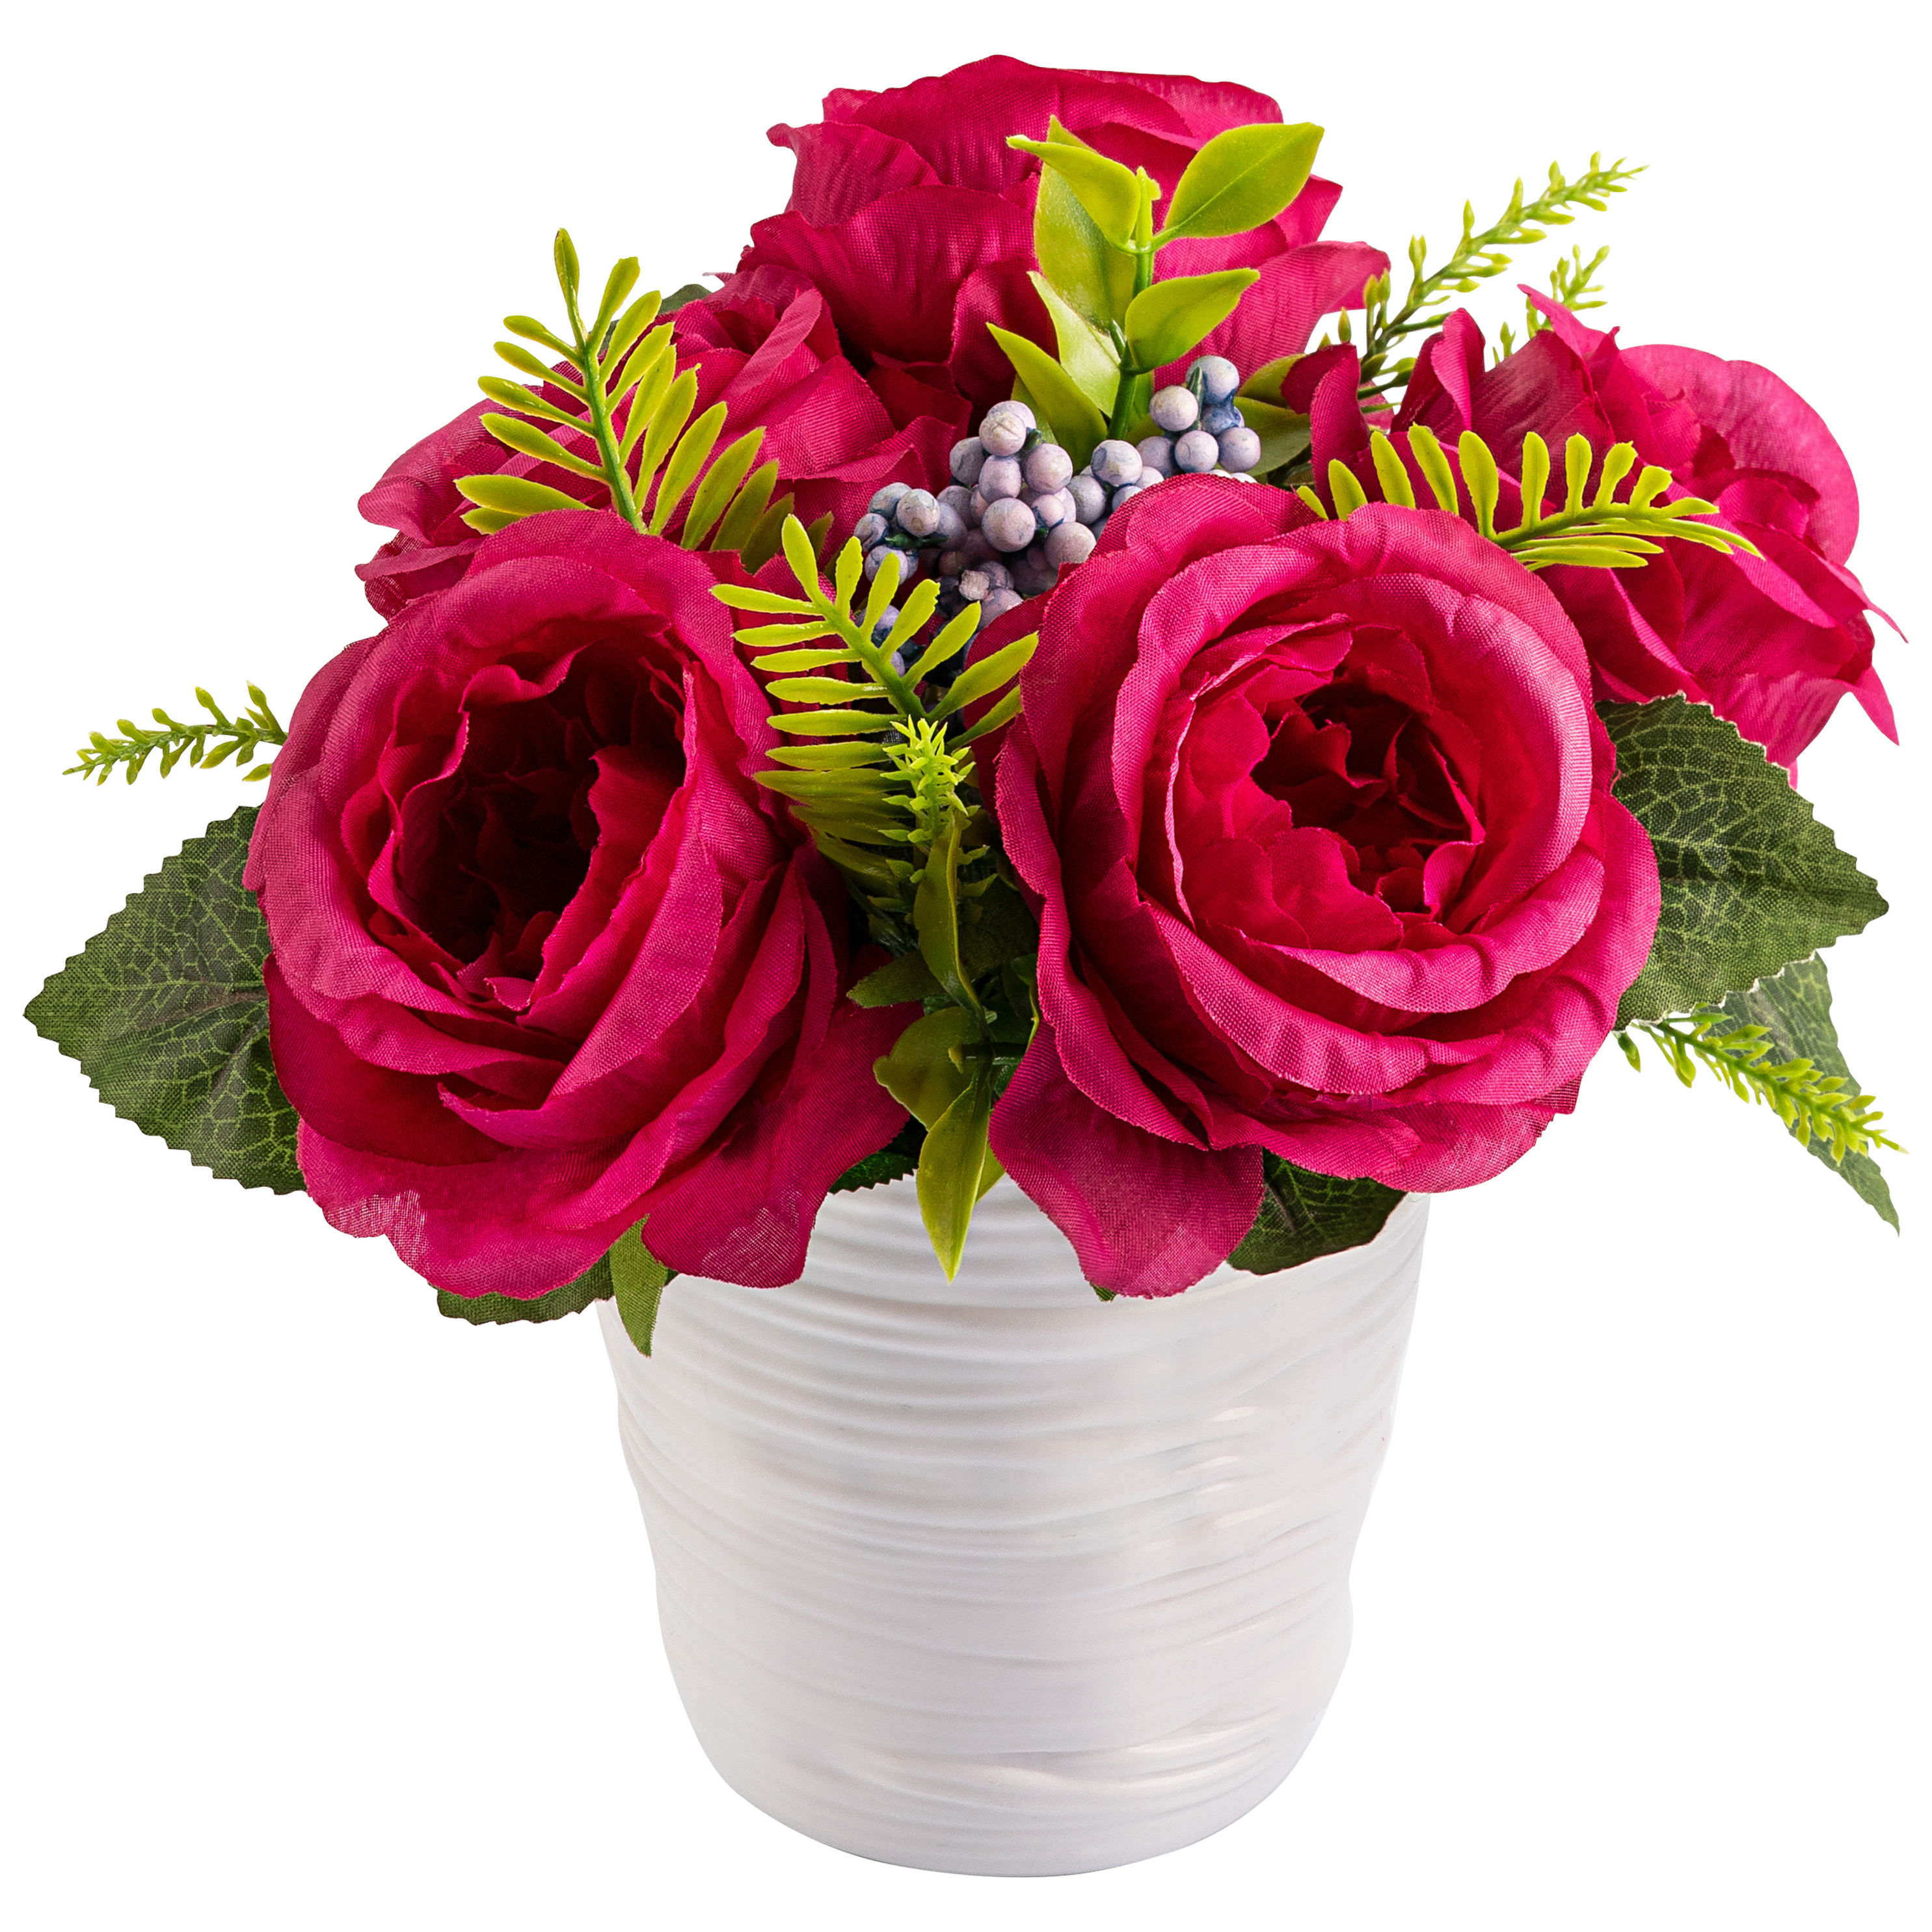 Kunstblumen Bouquet Rosen jetzt bei Weltbild.de bestellen